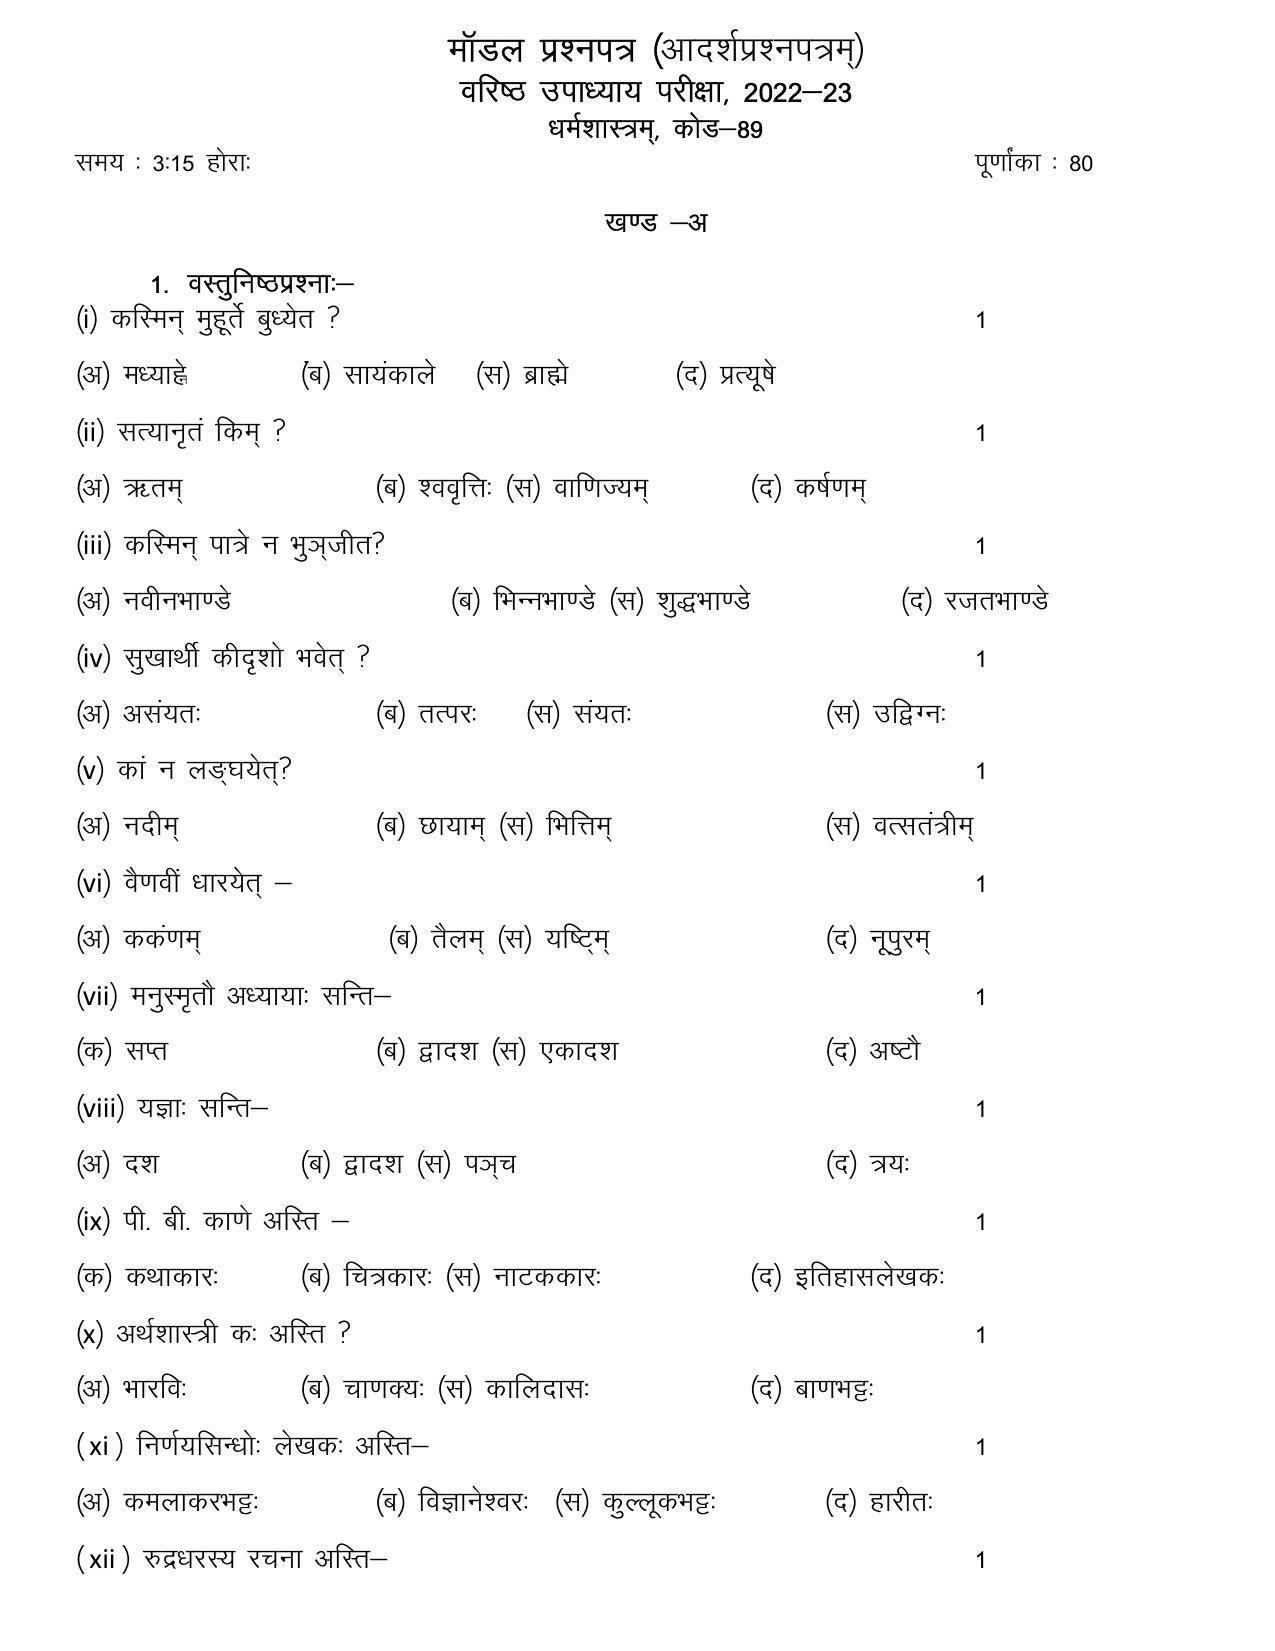 RBSE 2023 DHARAM SHASTRAM Varishtha Upadhyay Paper - Page 6